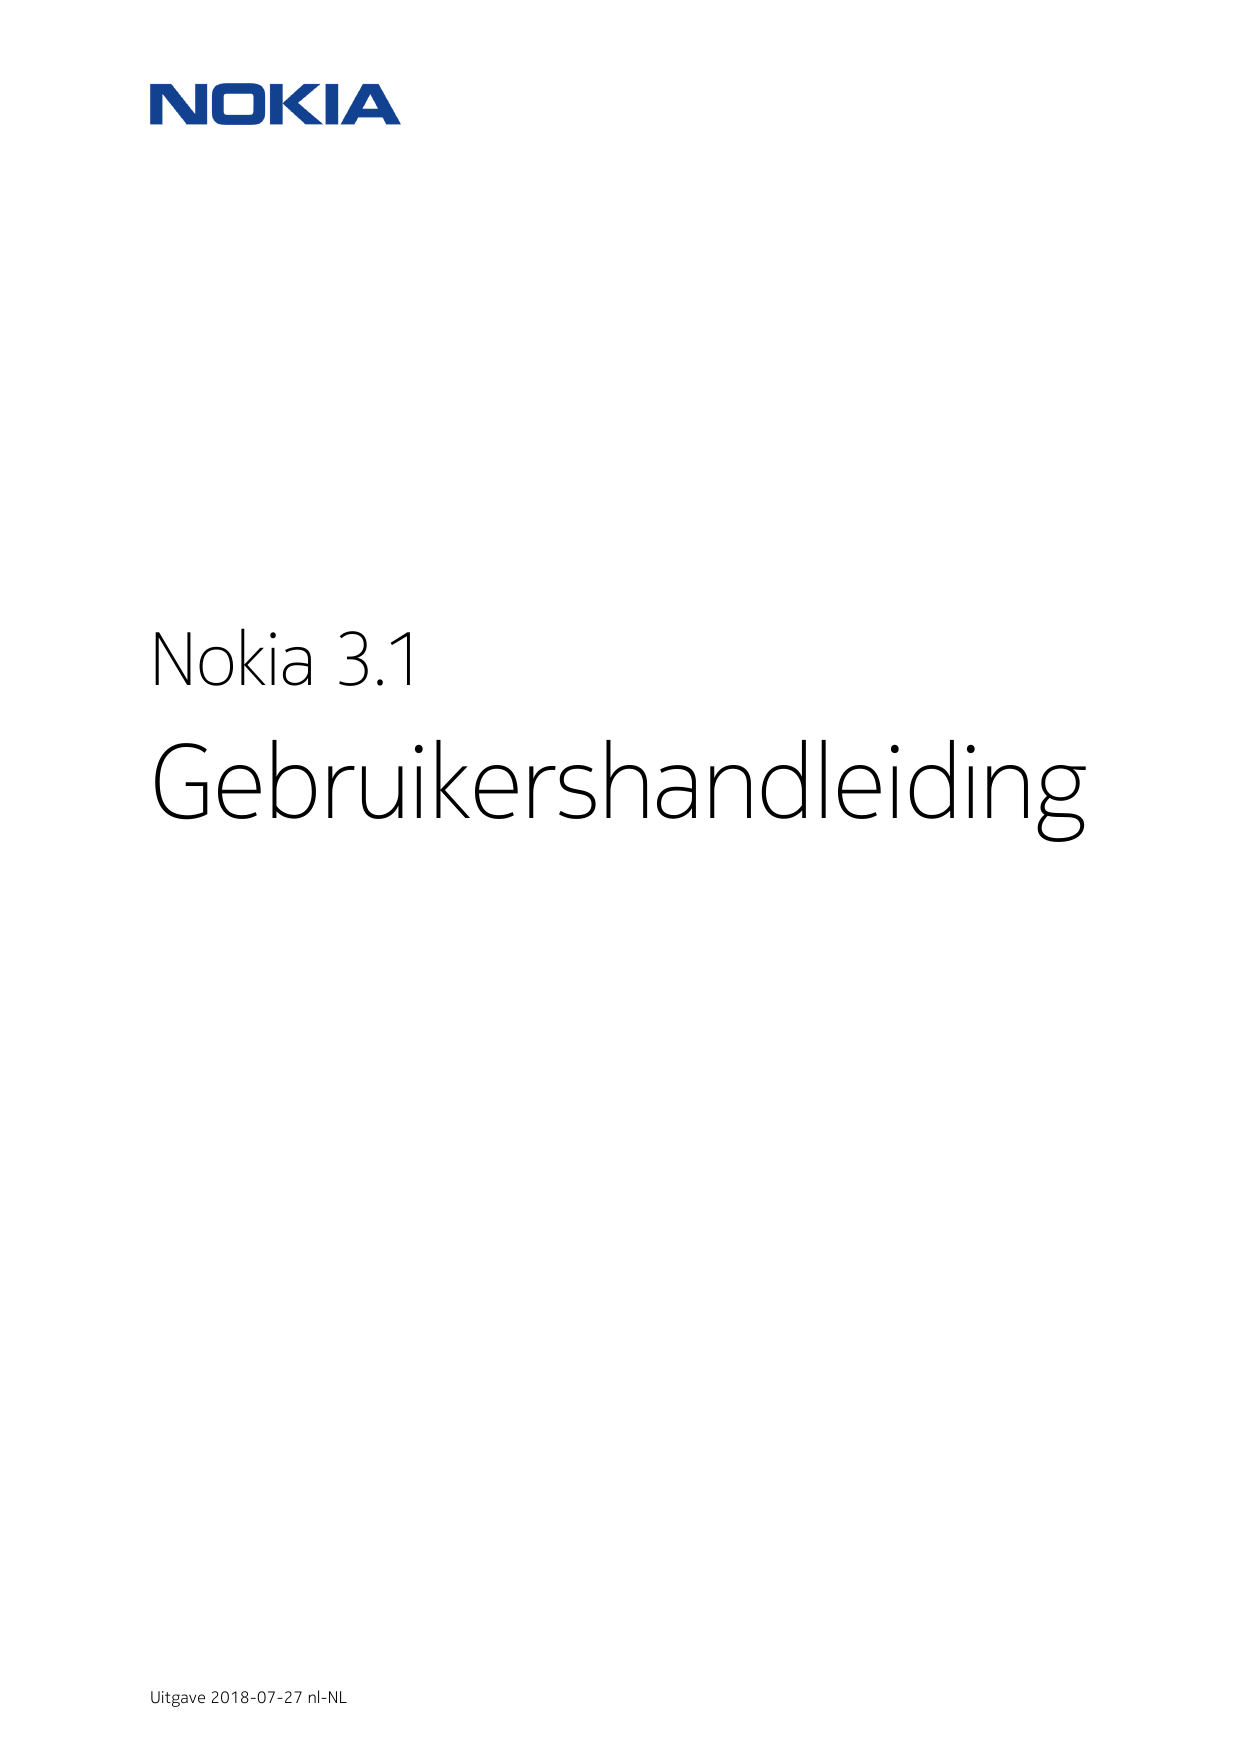 Nokia 3.1GebruikershandleidingUitgave 2018-07-27 nl-NL